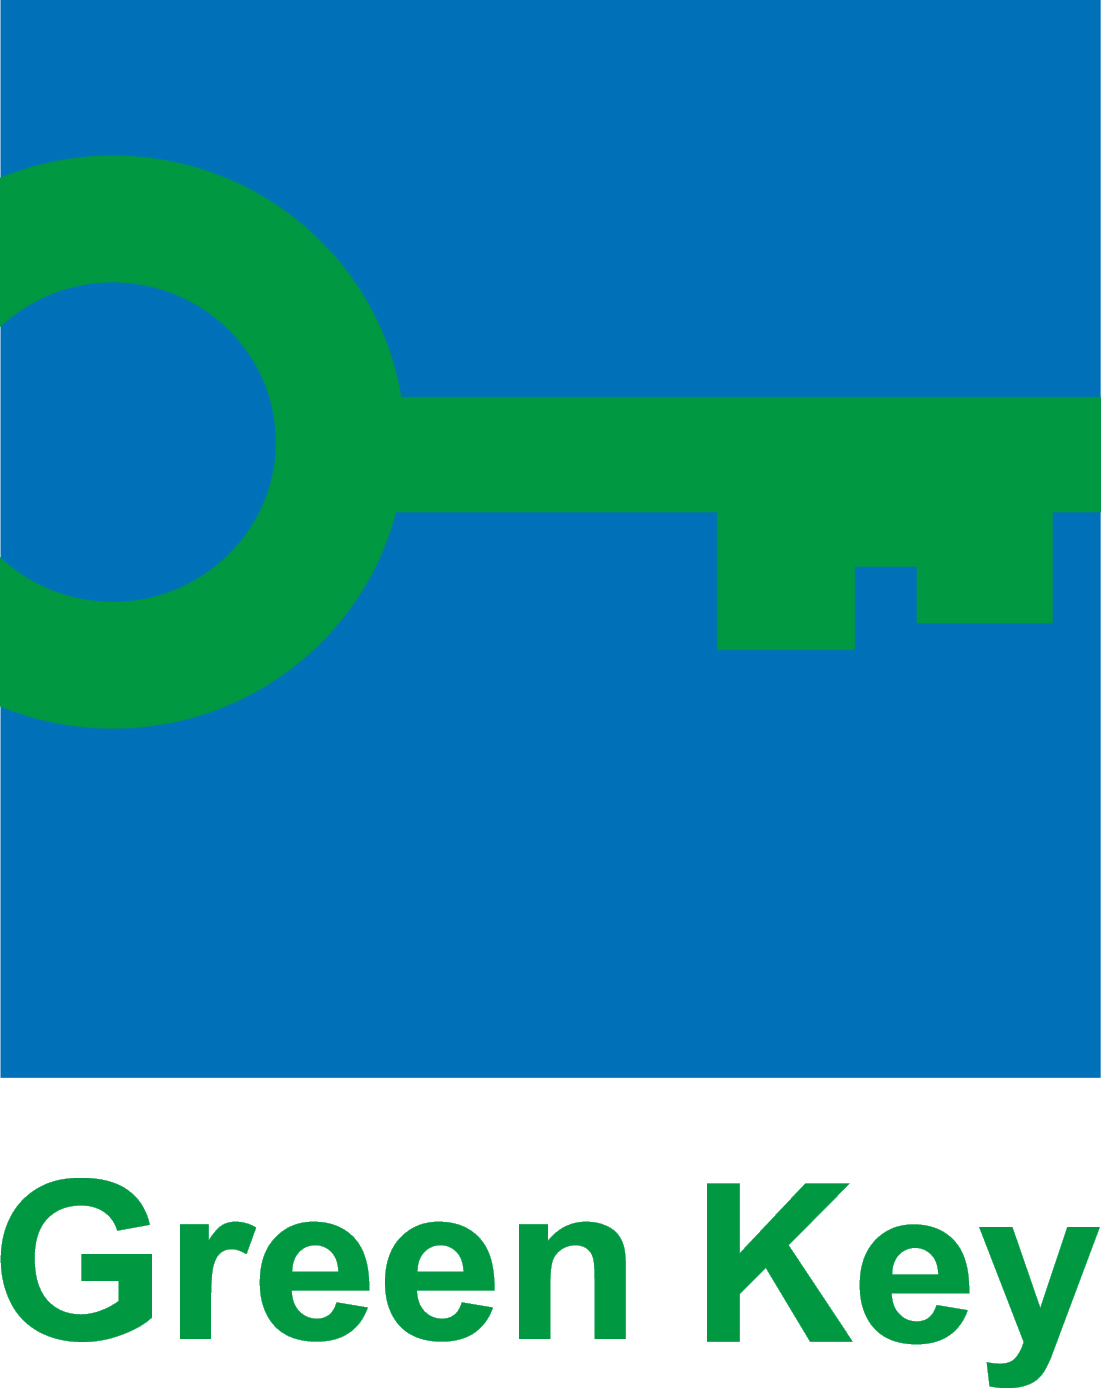 Green Key теперь в "Сибири"